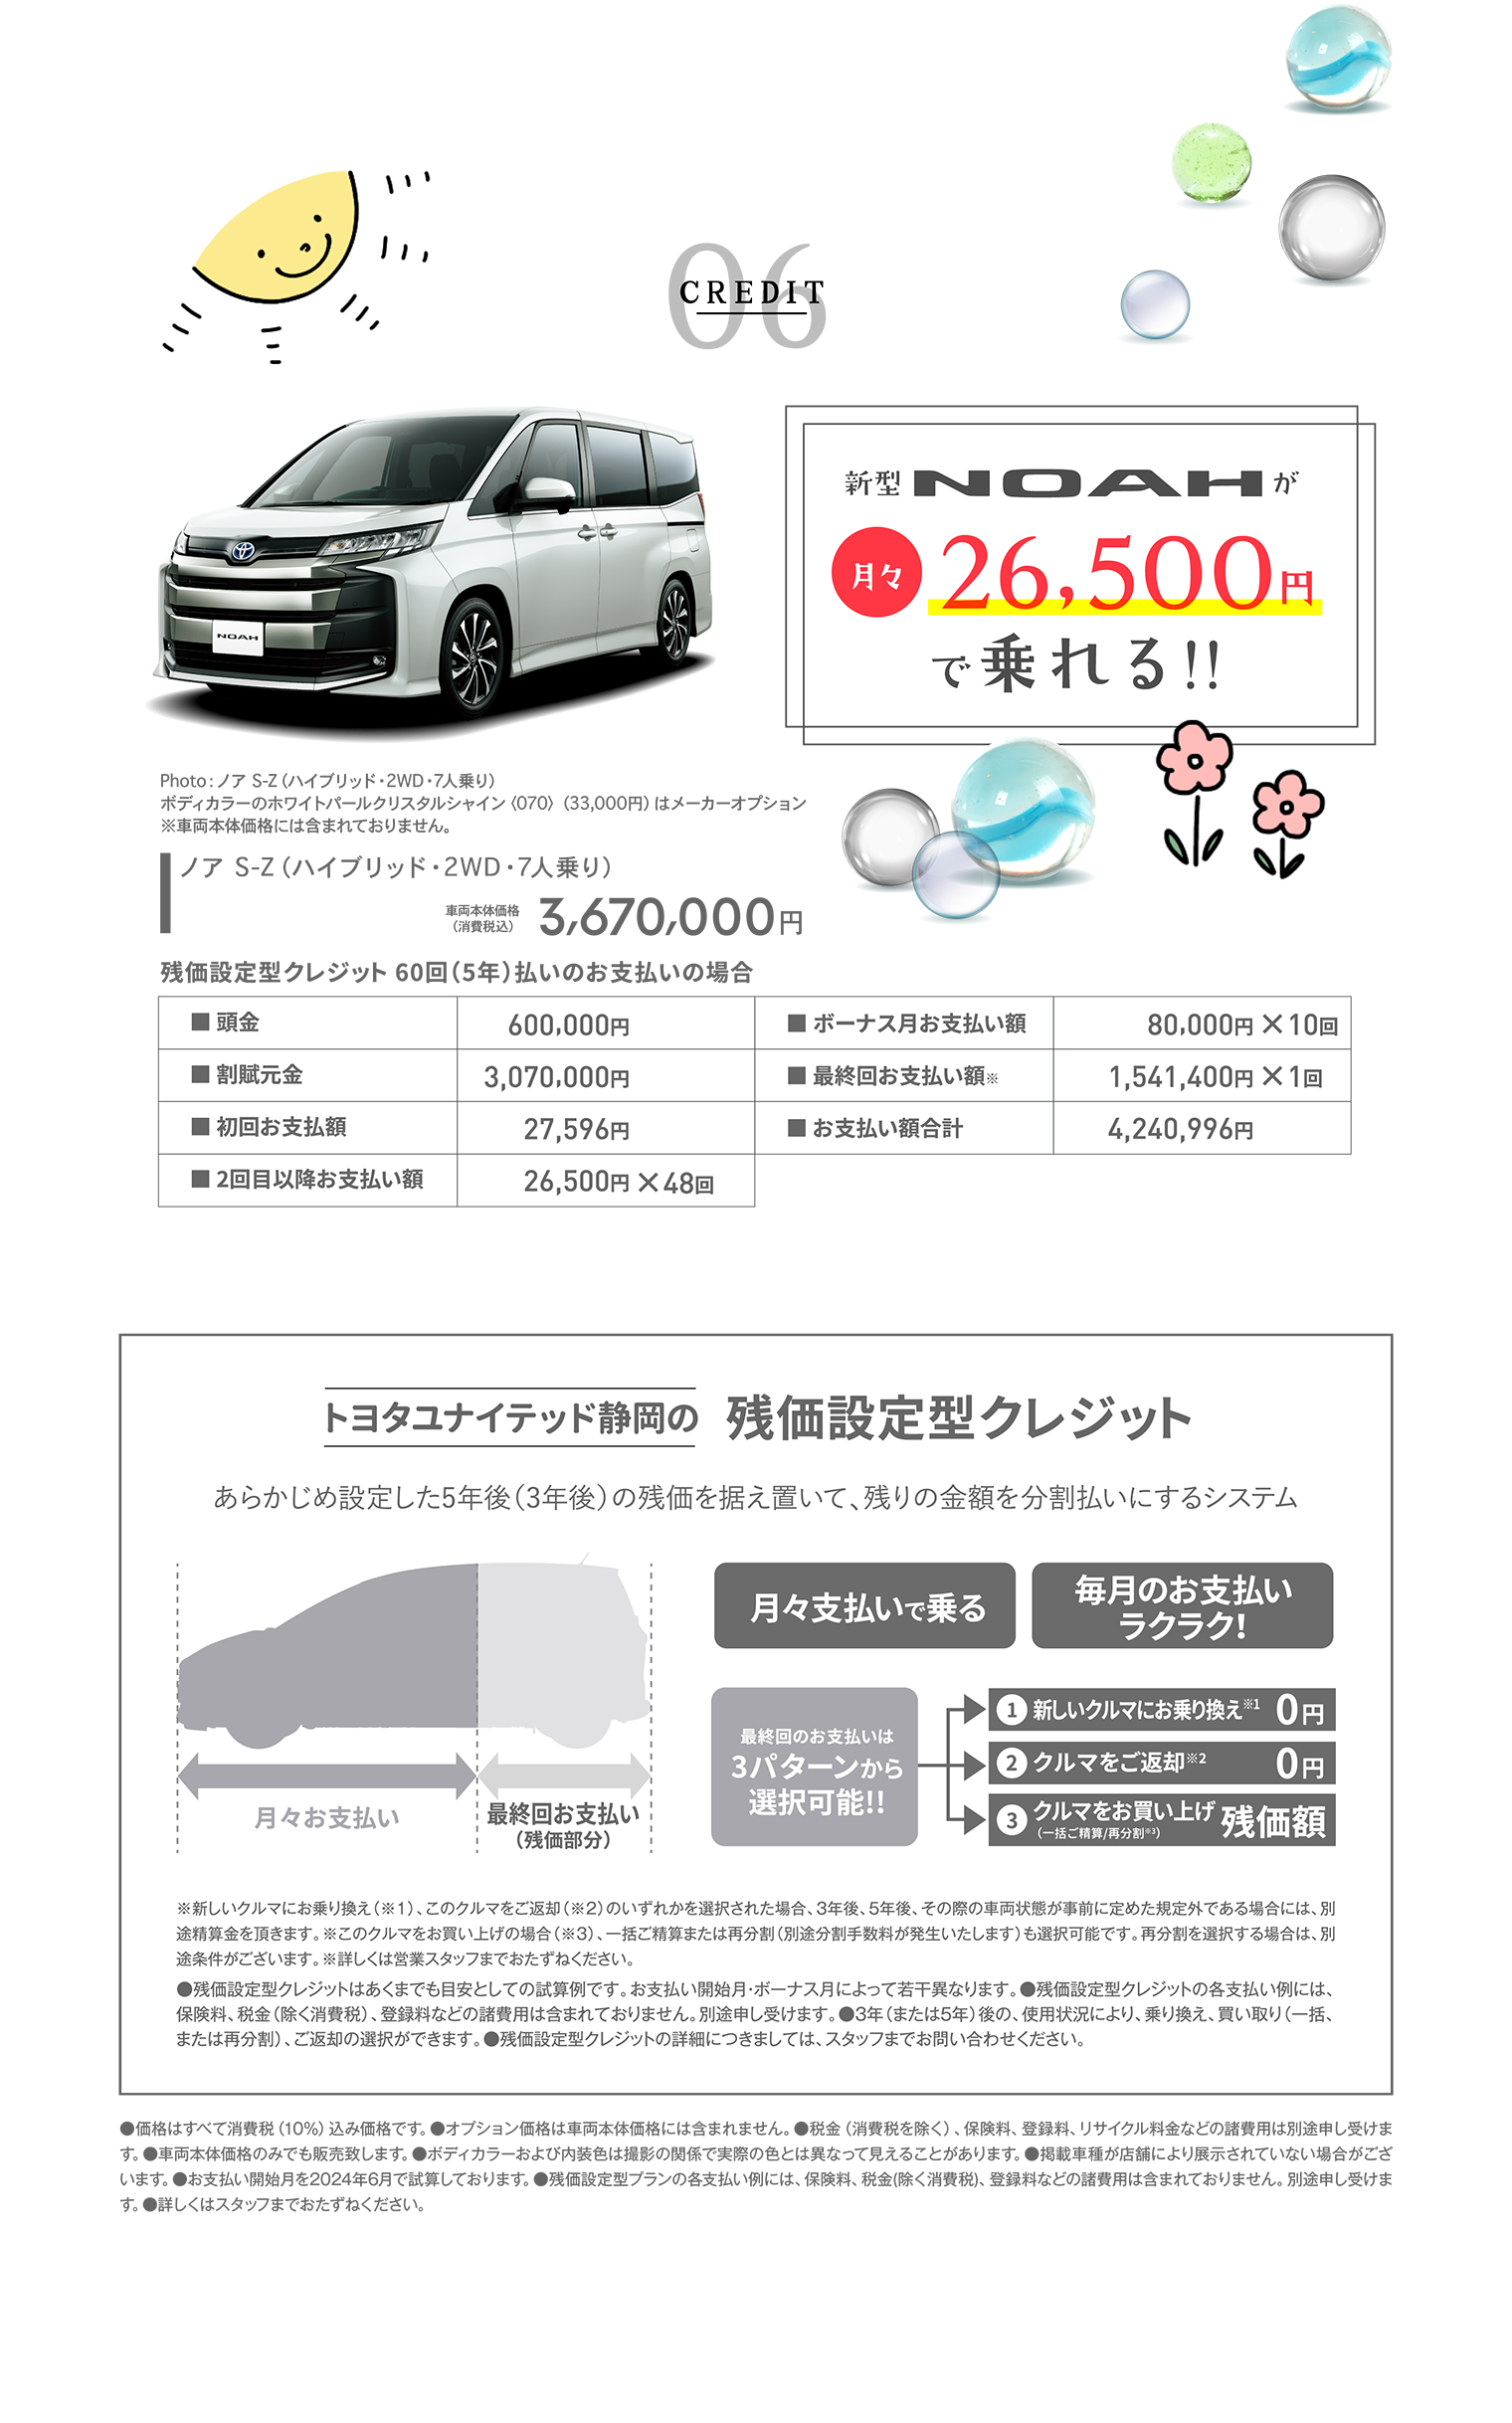 06 CREDIT 新型NOAH が 月々24,200円で乗れる!!